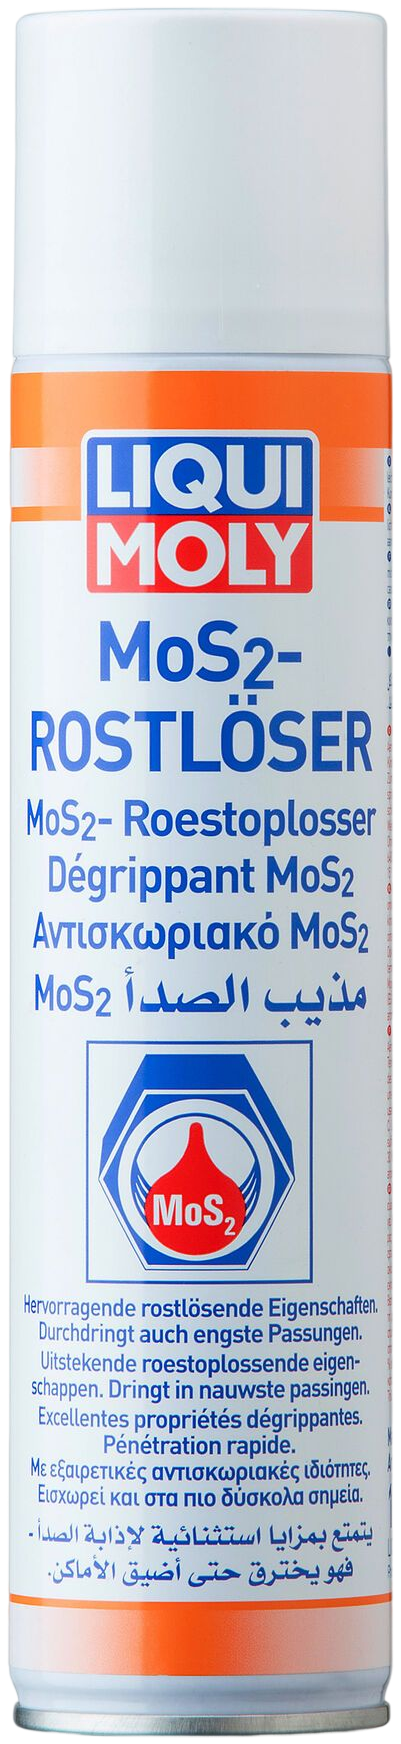 Liqui Moly MoS2-roestoplosser, 300 ml